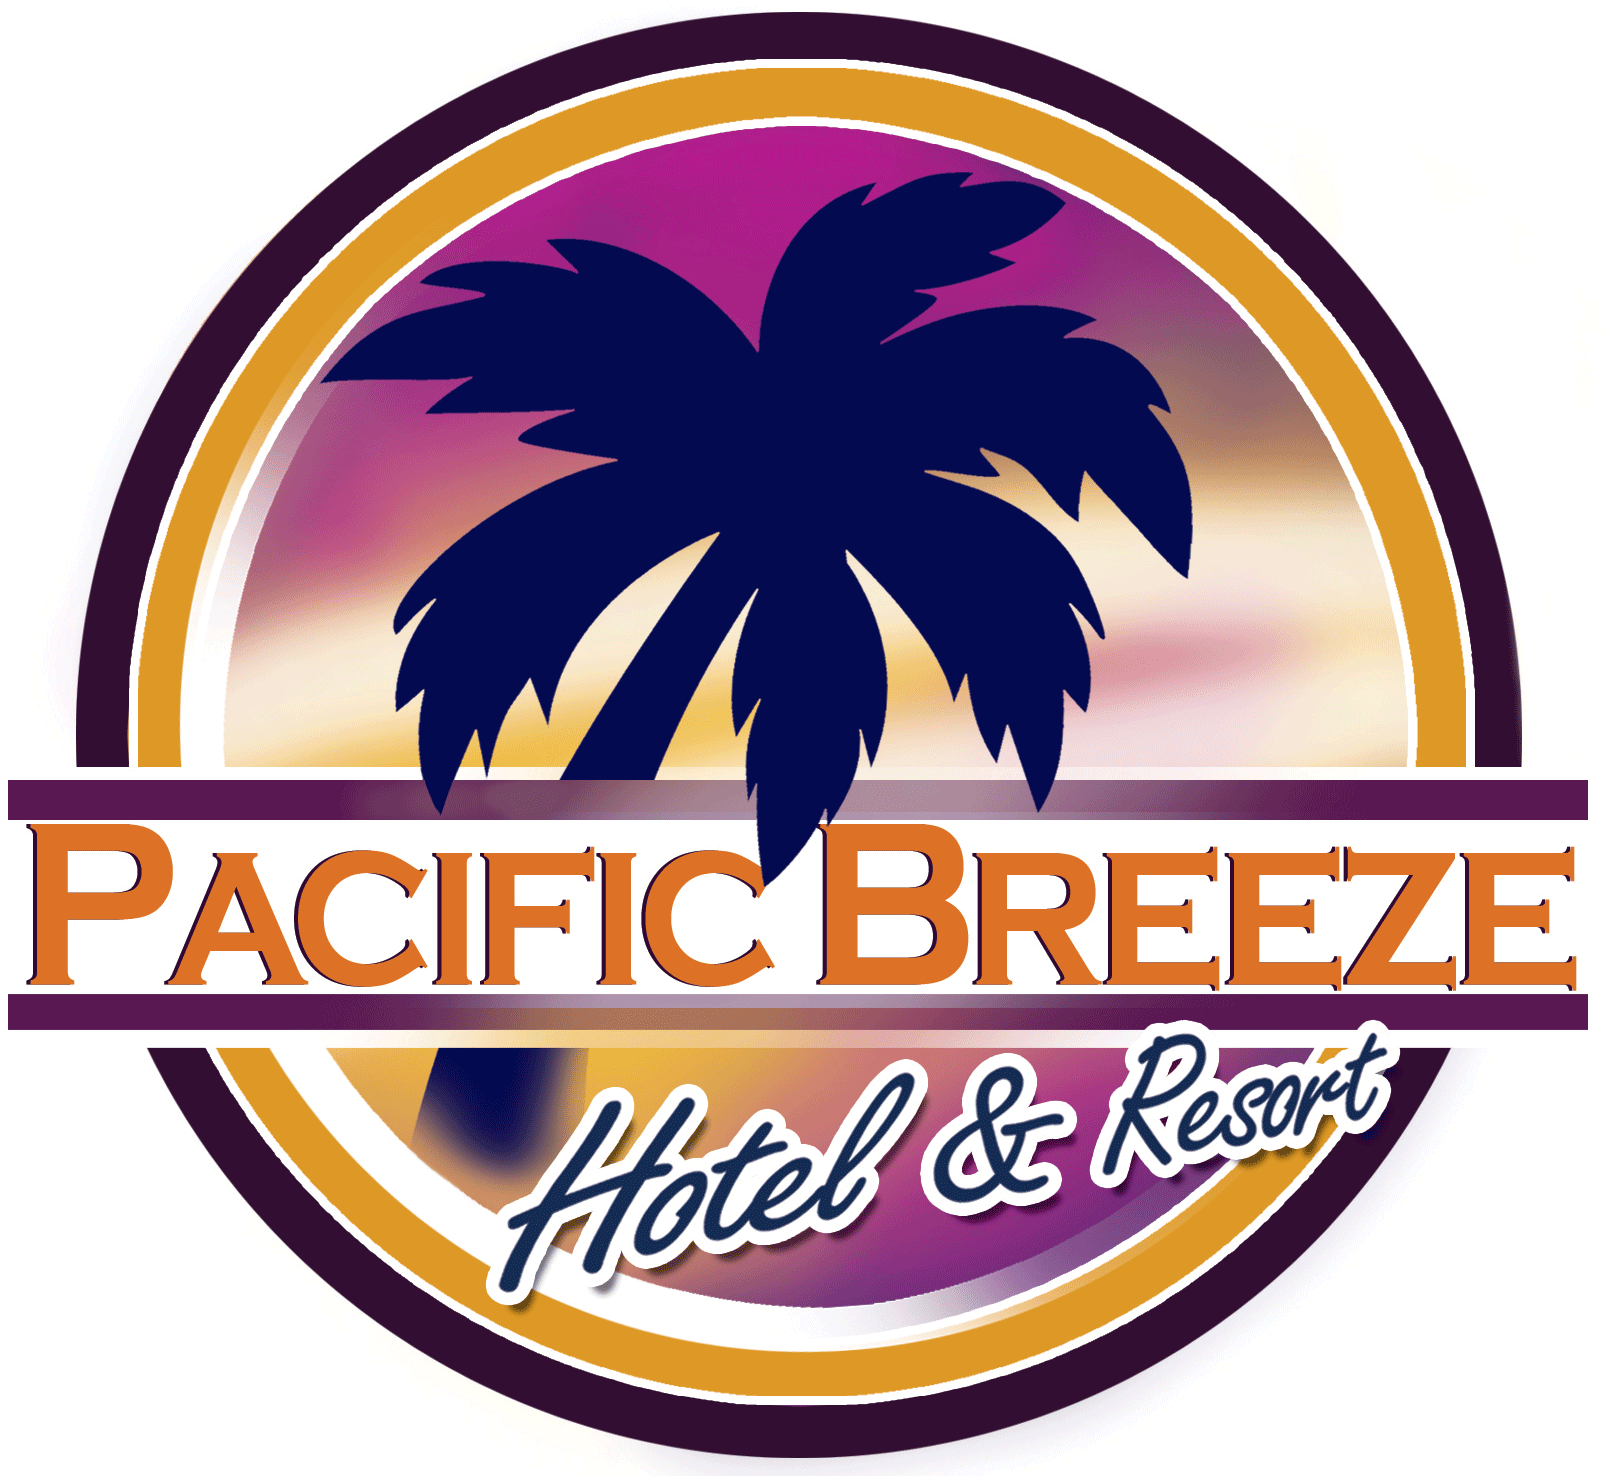 Pacific Breeze Hotel